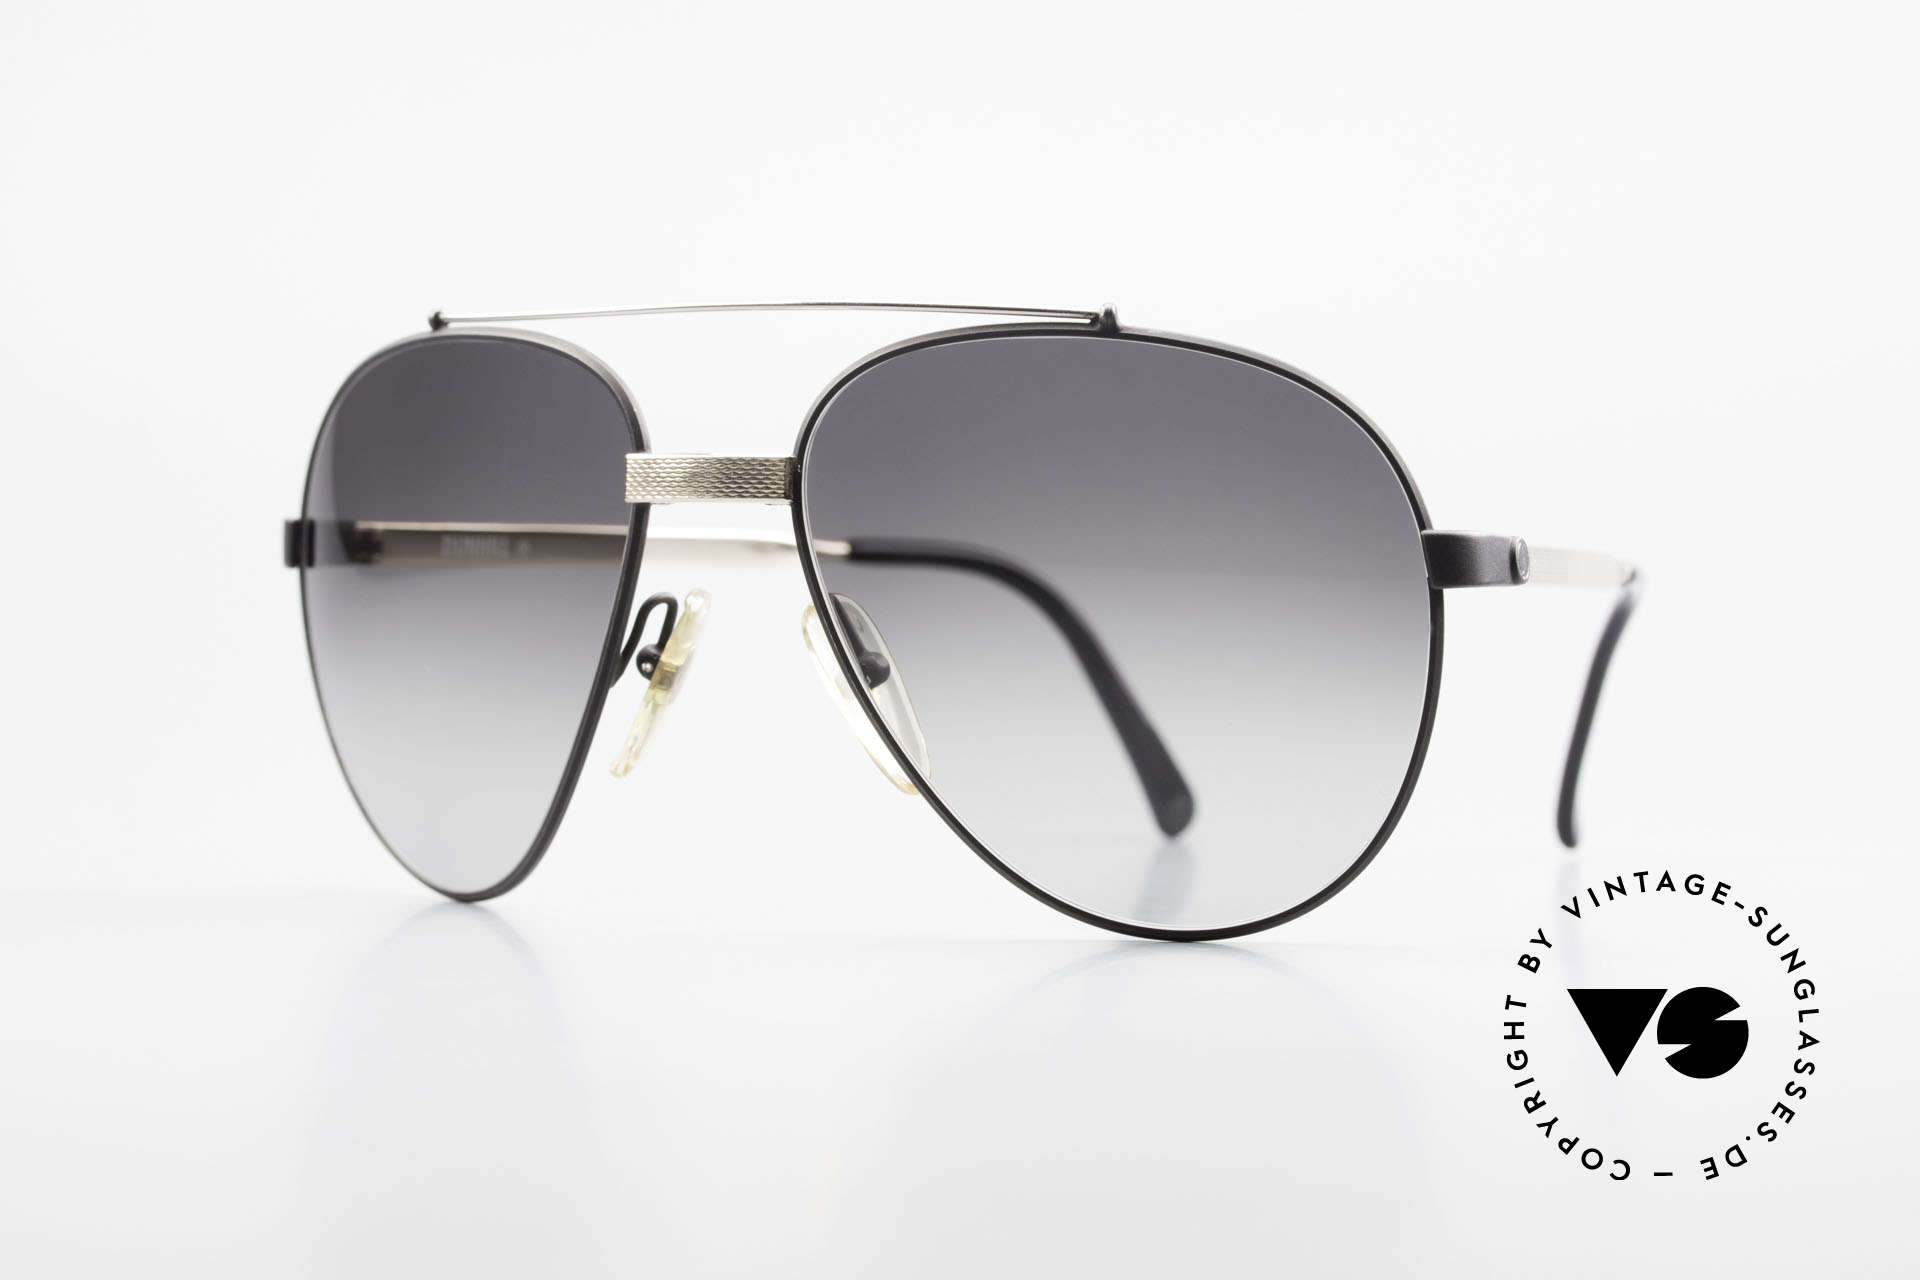 Sunglasses Dunhill 6023 80's Luxury Sunglasses Aviator